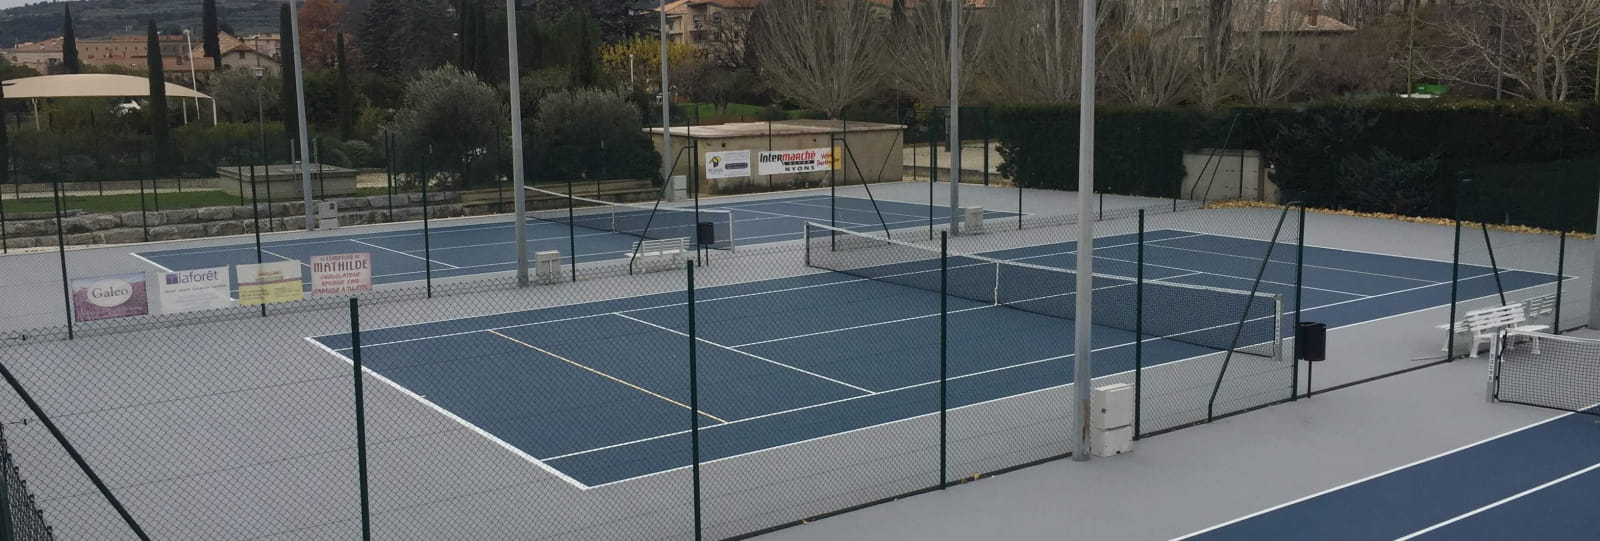 Tennis Club de Nyons